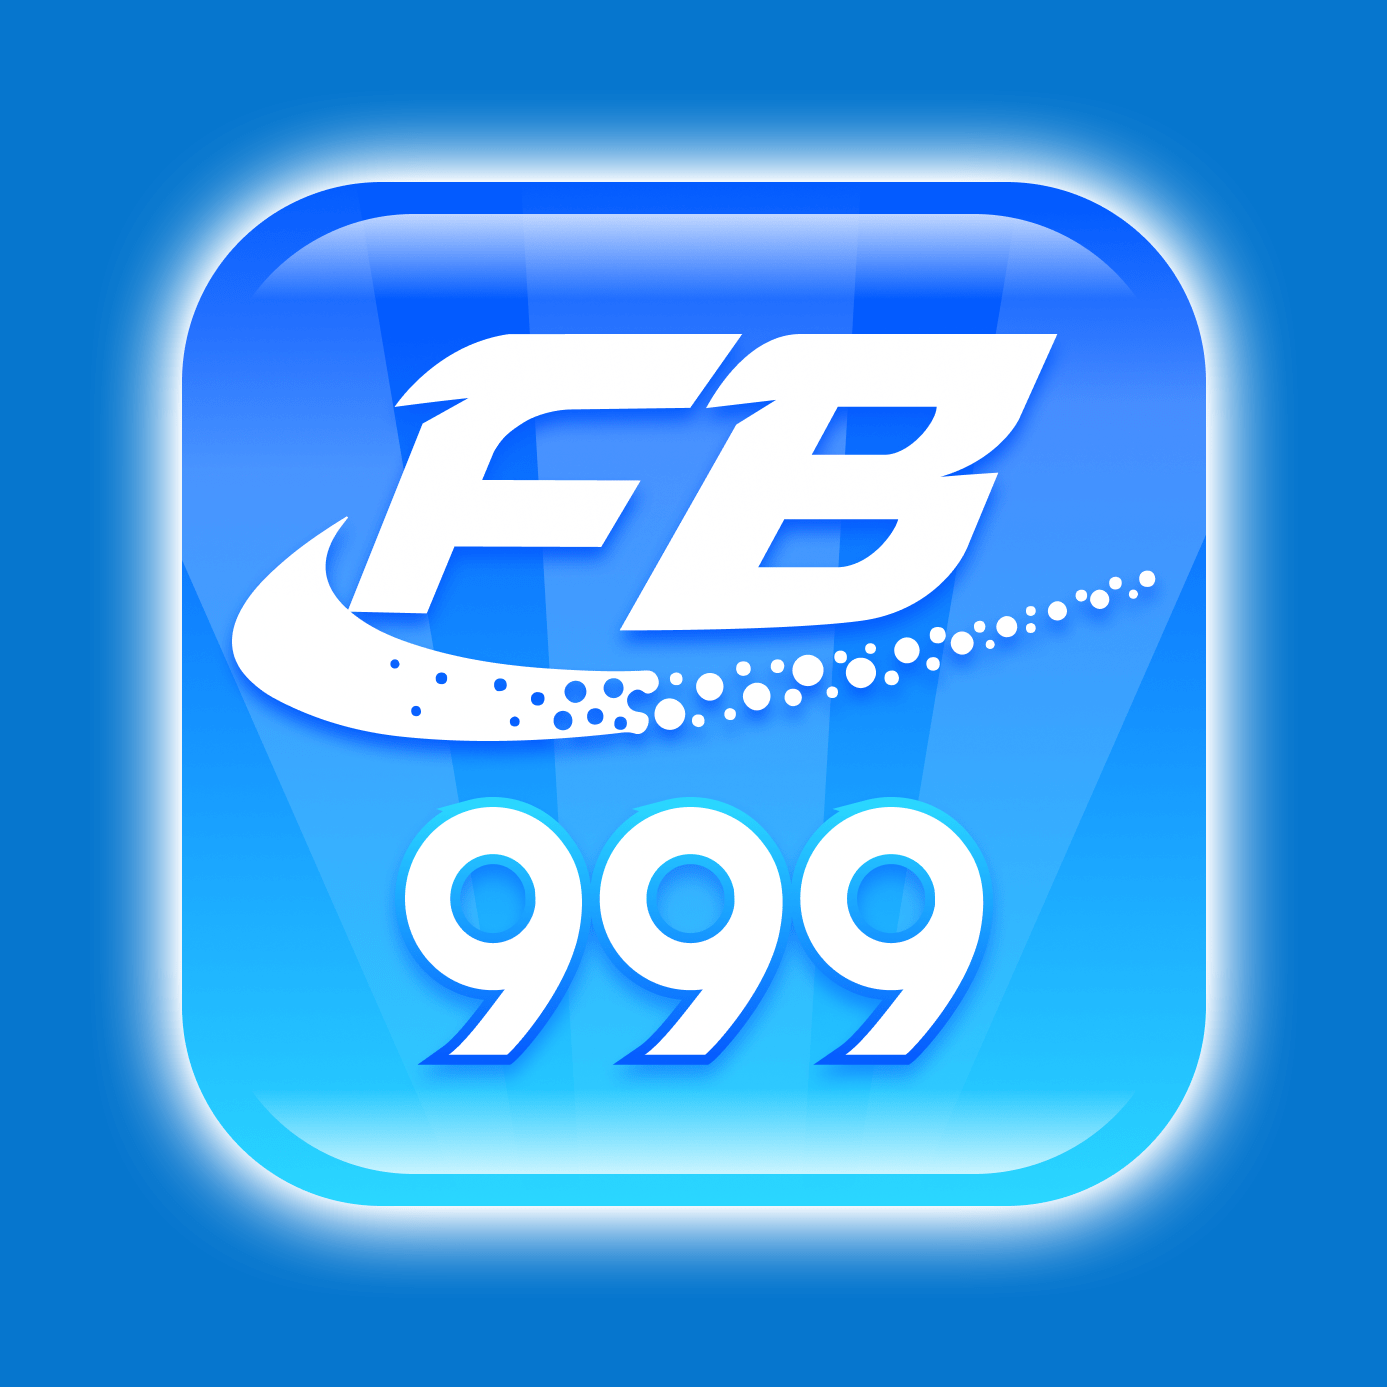 FB999 – Affiliate & Referral Program